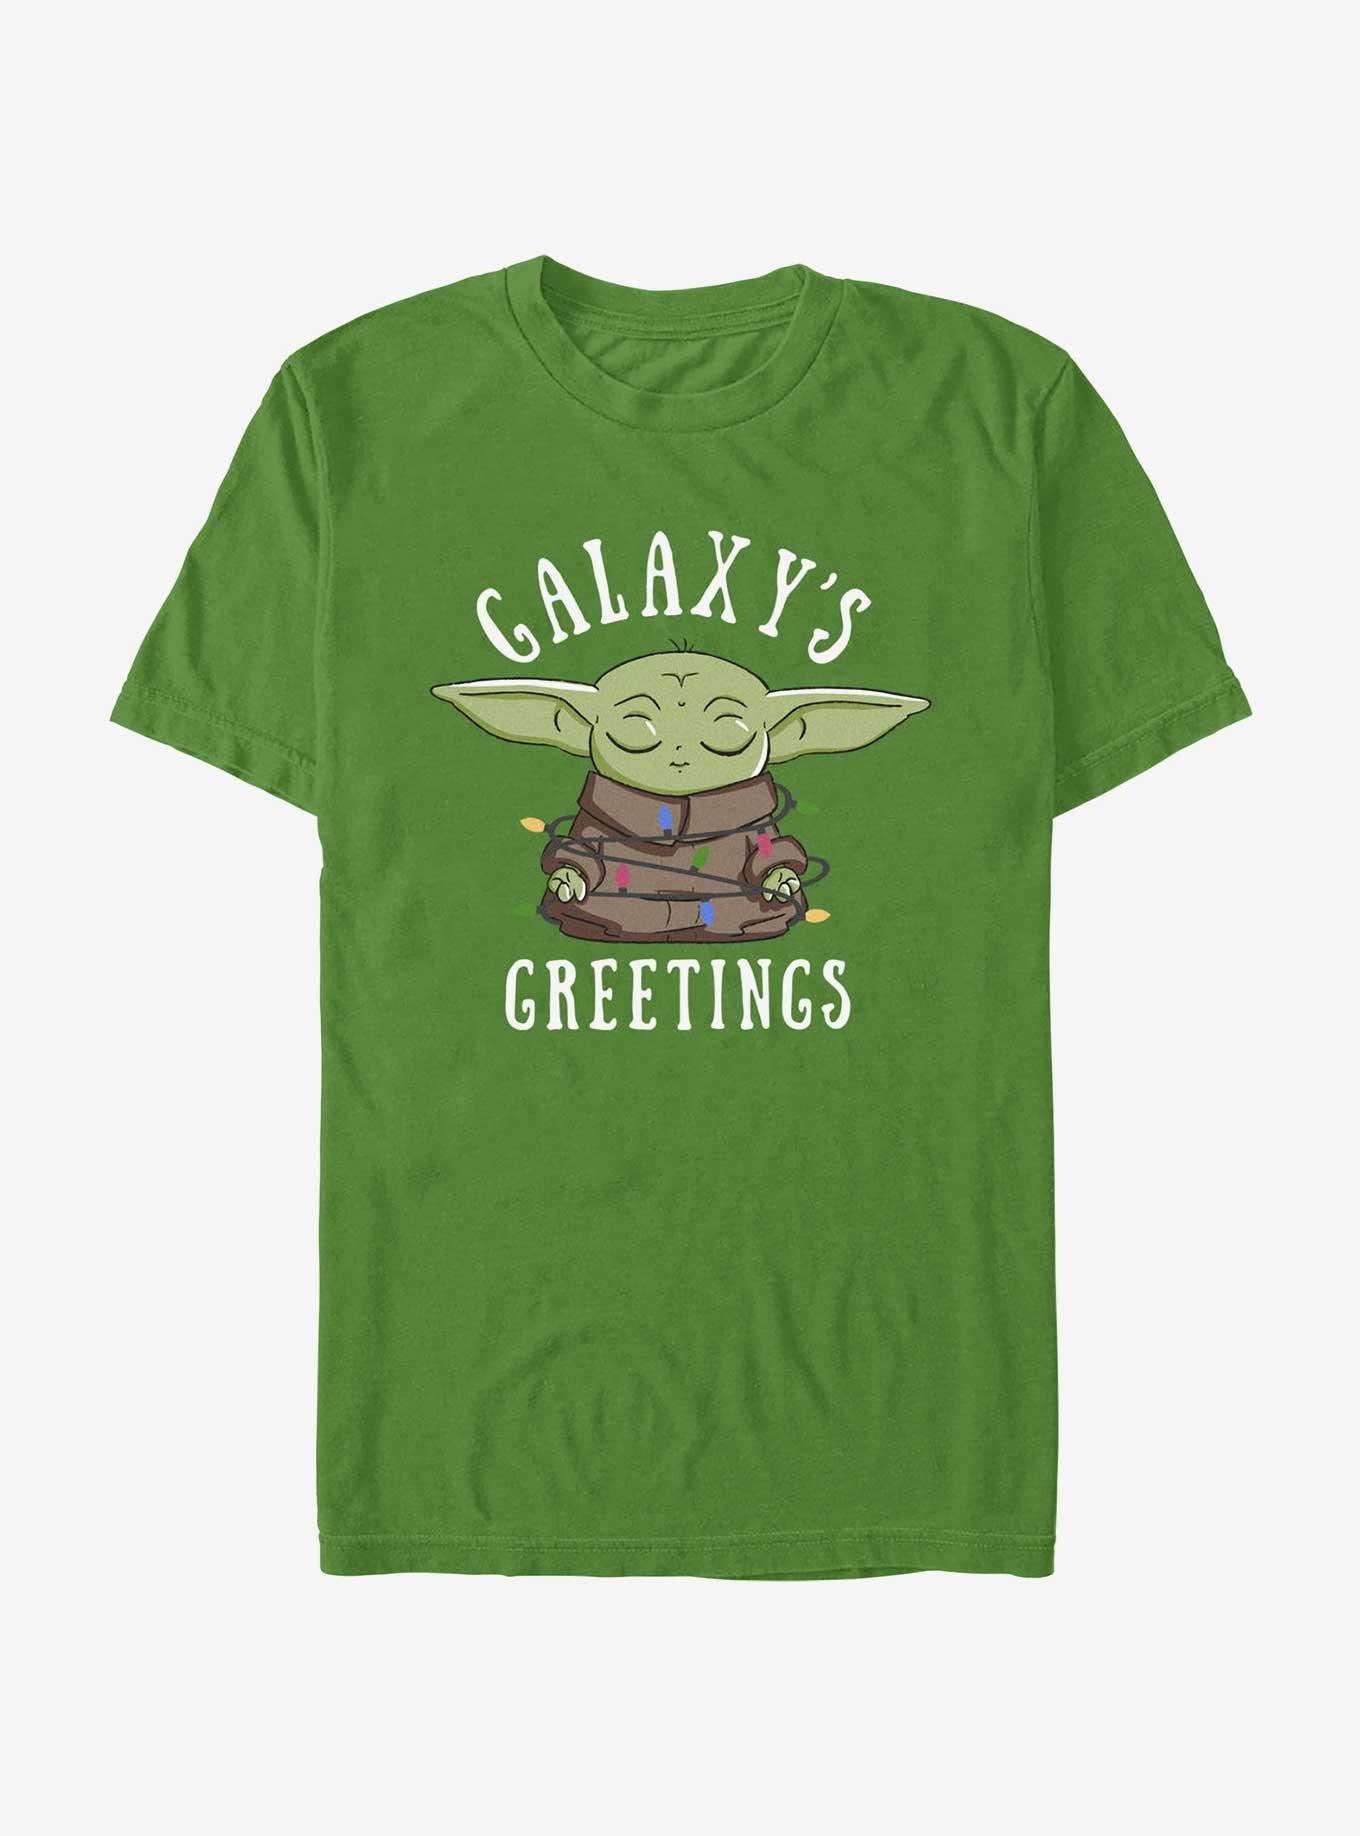 Star Wars The Mandalorian Galaxy's Greetings T-Shirt